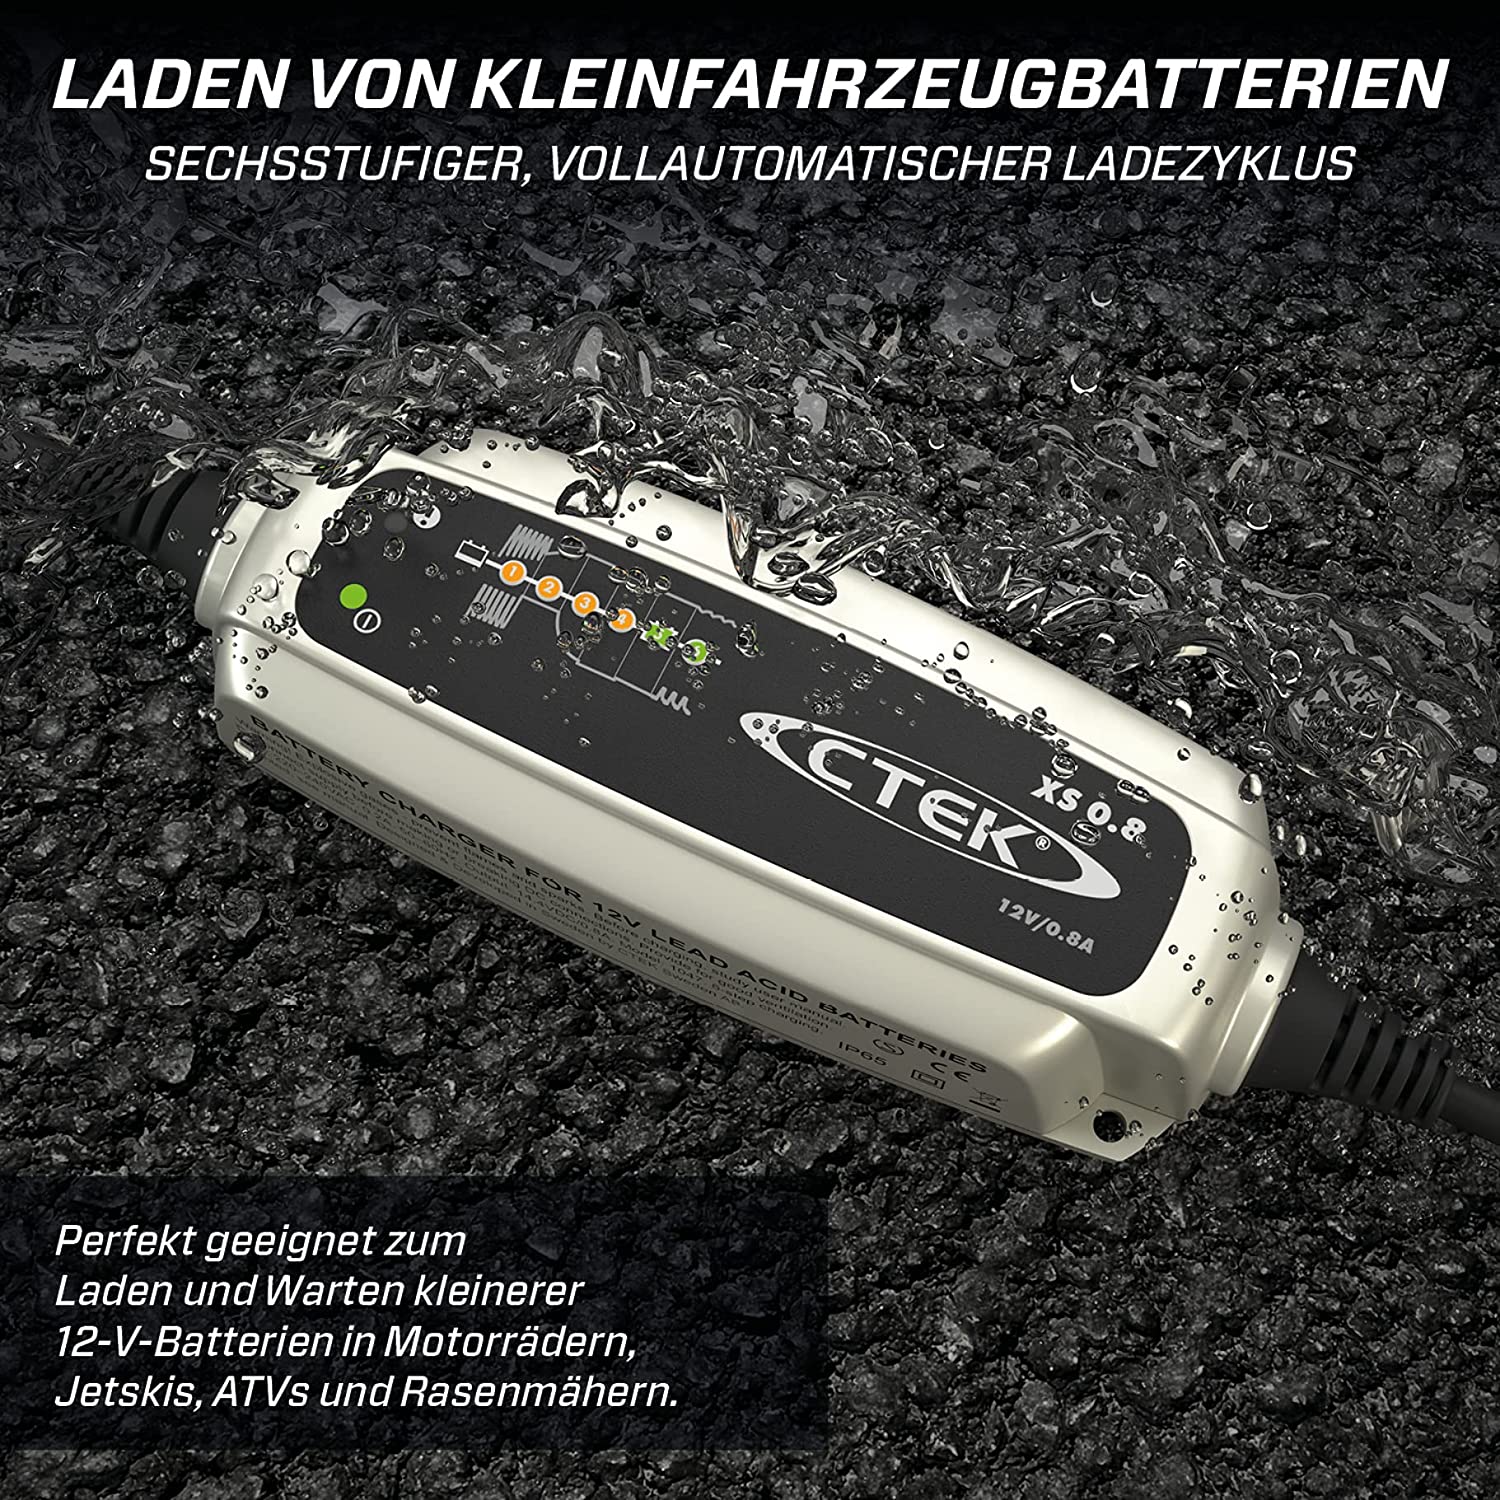 CTEK XS 0.8 - Der kompakte Batterielader mit EU-Steckdose